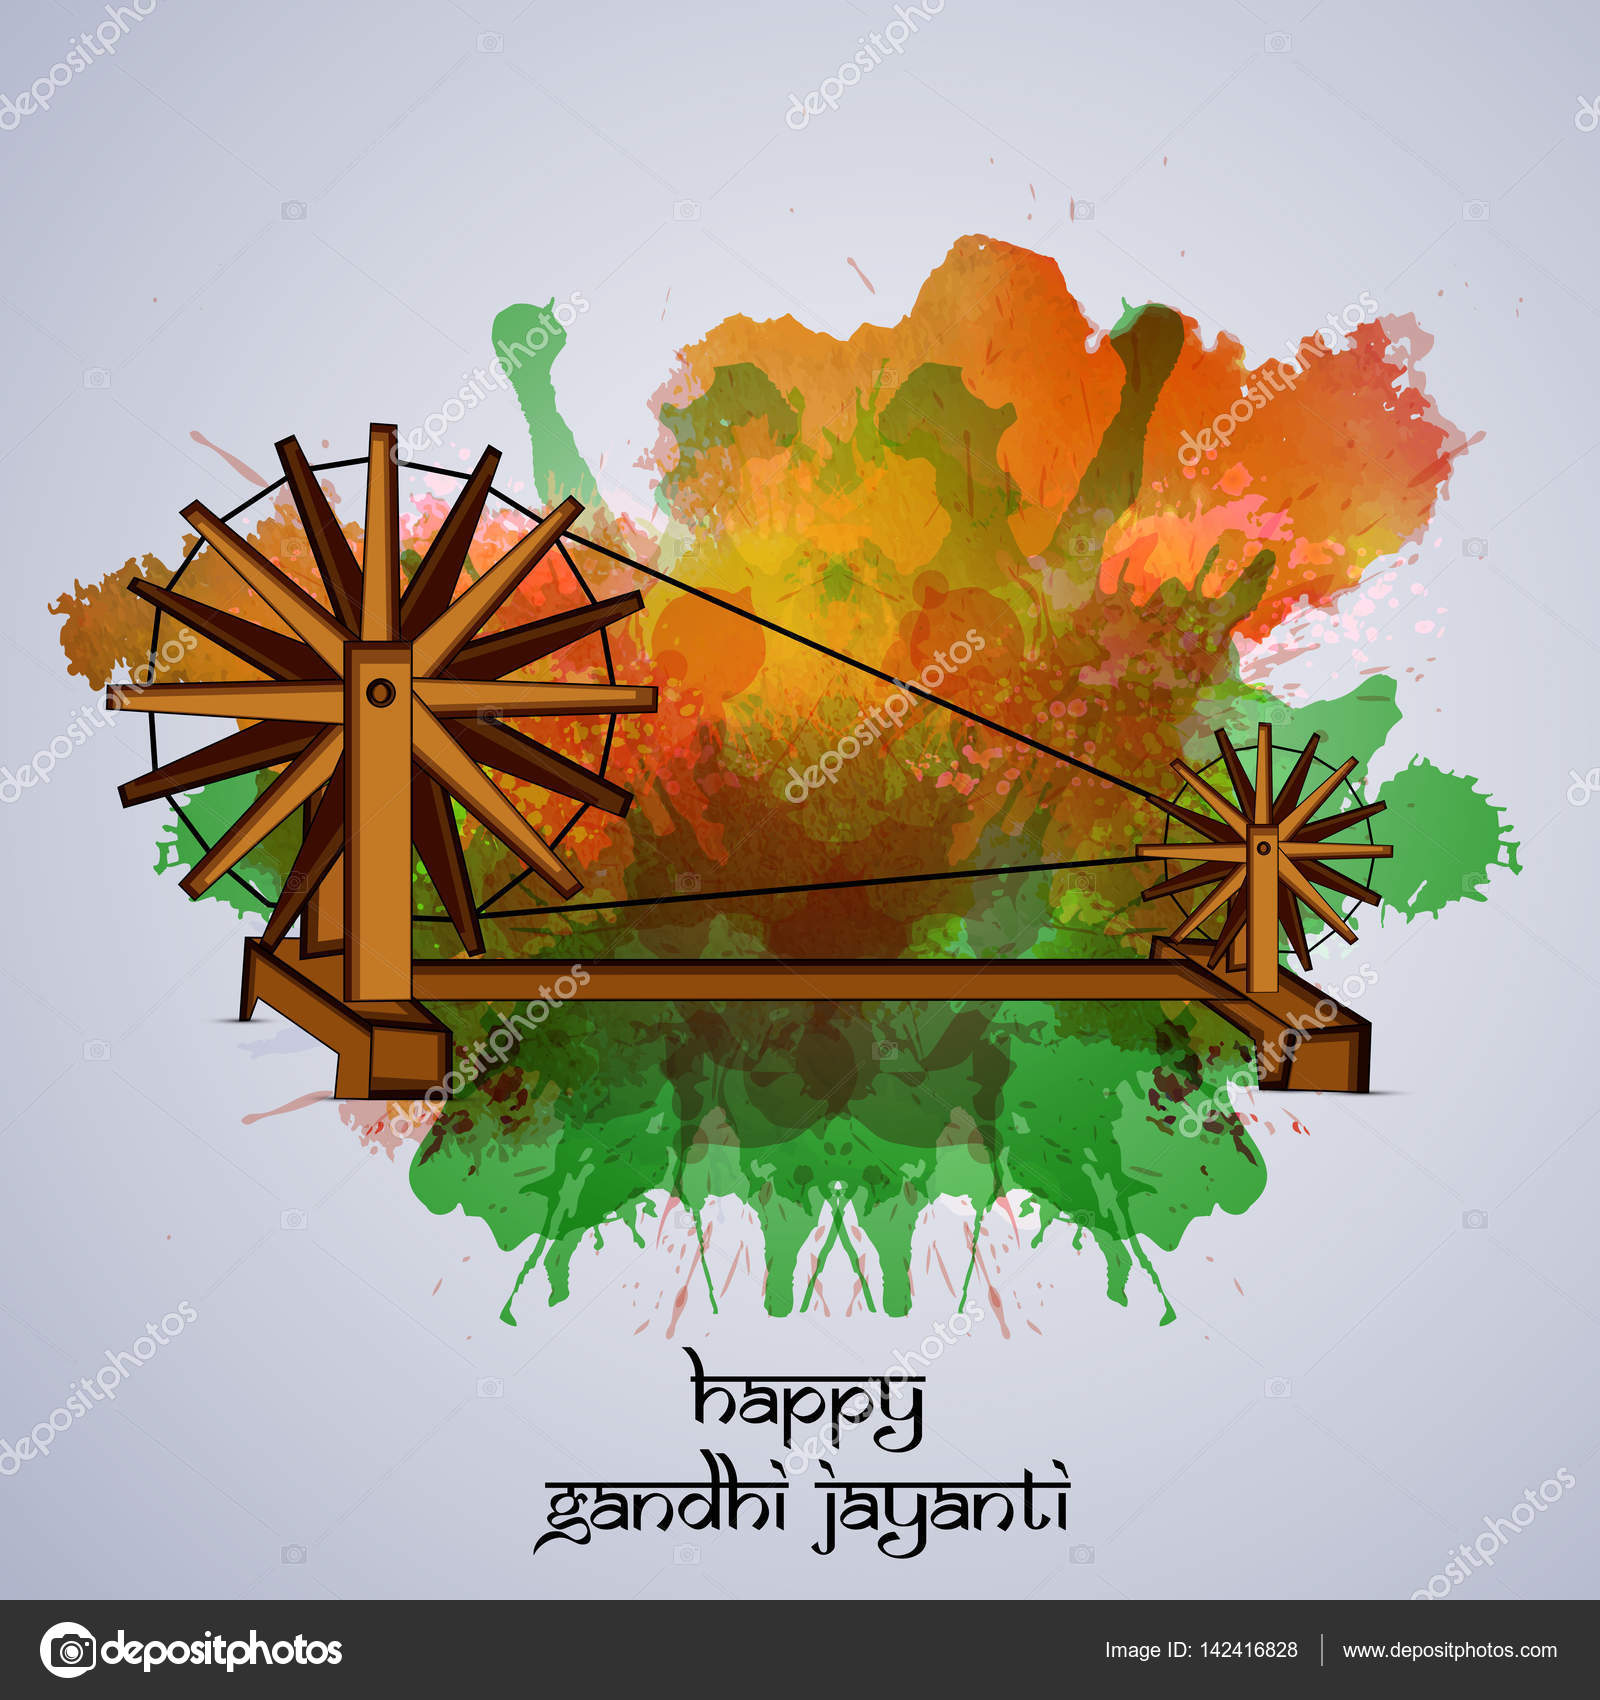 Illustration of Gandhi Jayanti Background Stock Vector Image by  ©InfiniteGraphic #142416828